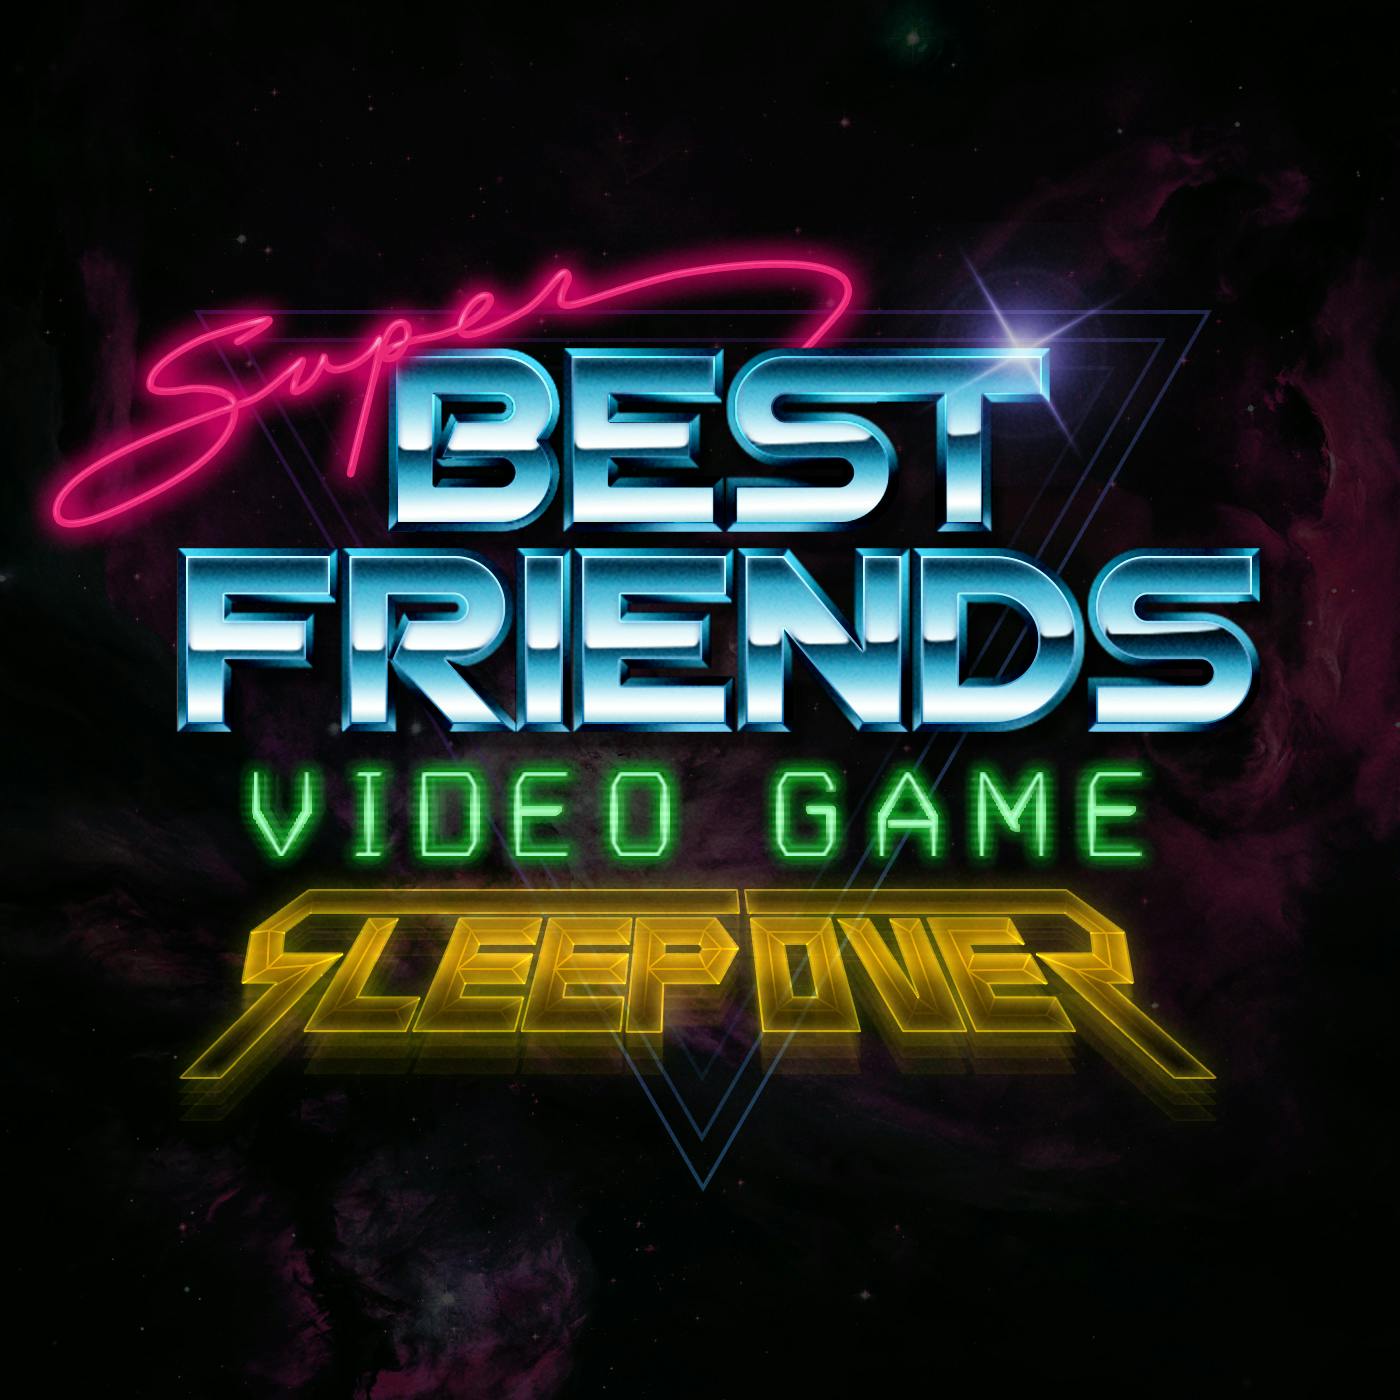 Super Best Friends Video Game Sleepover - Episode 37